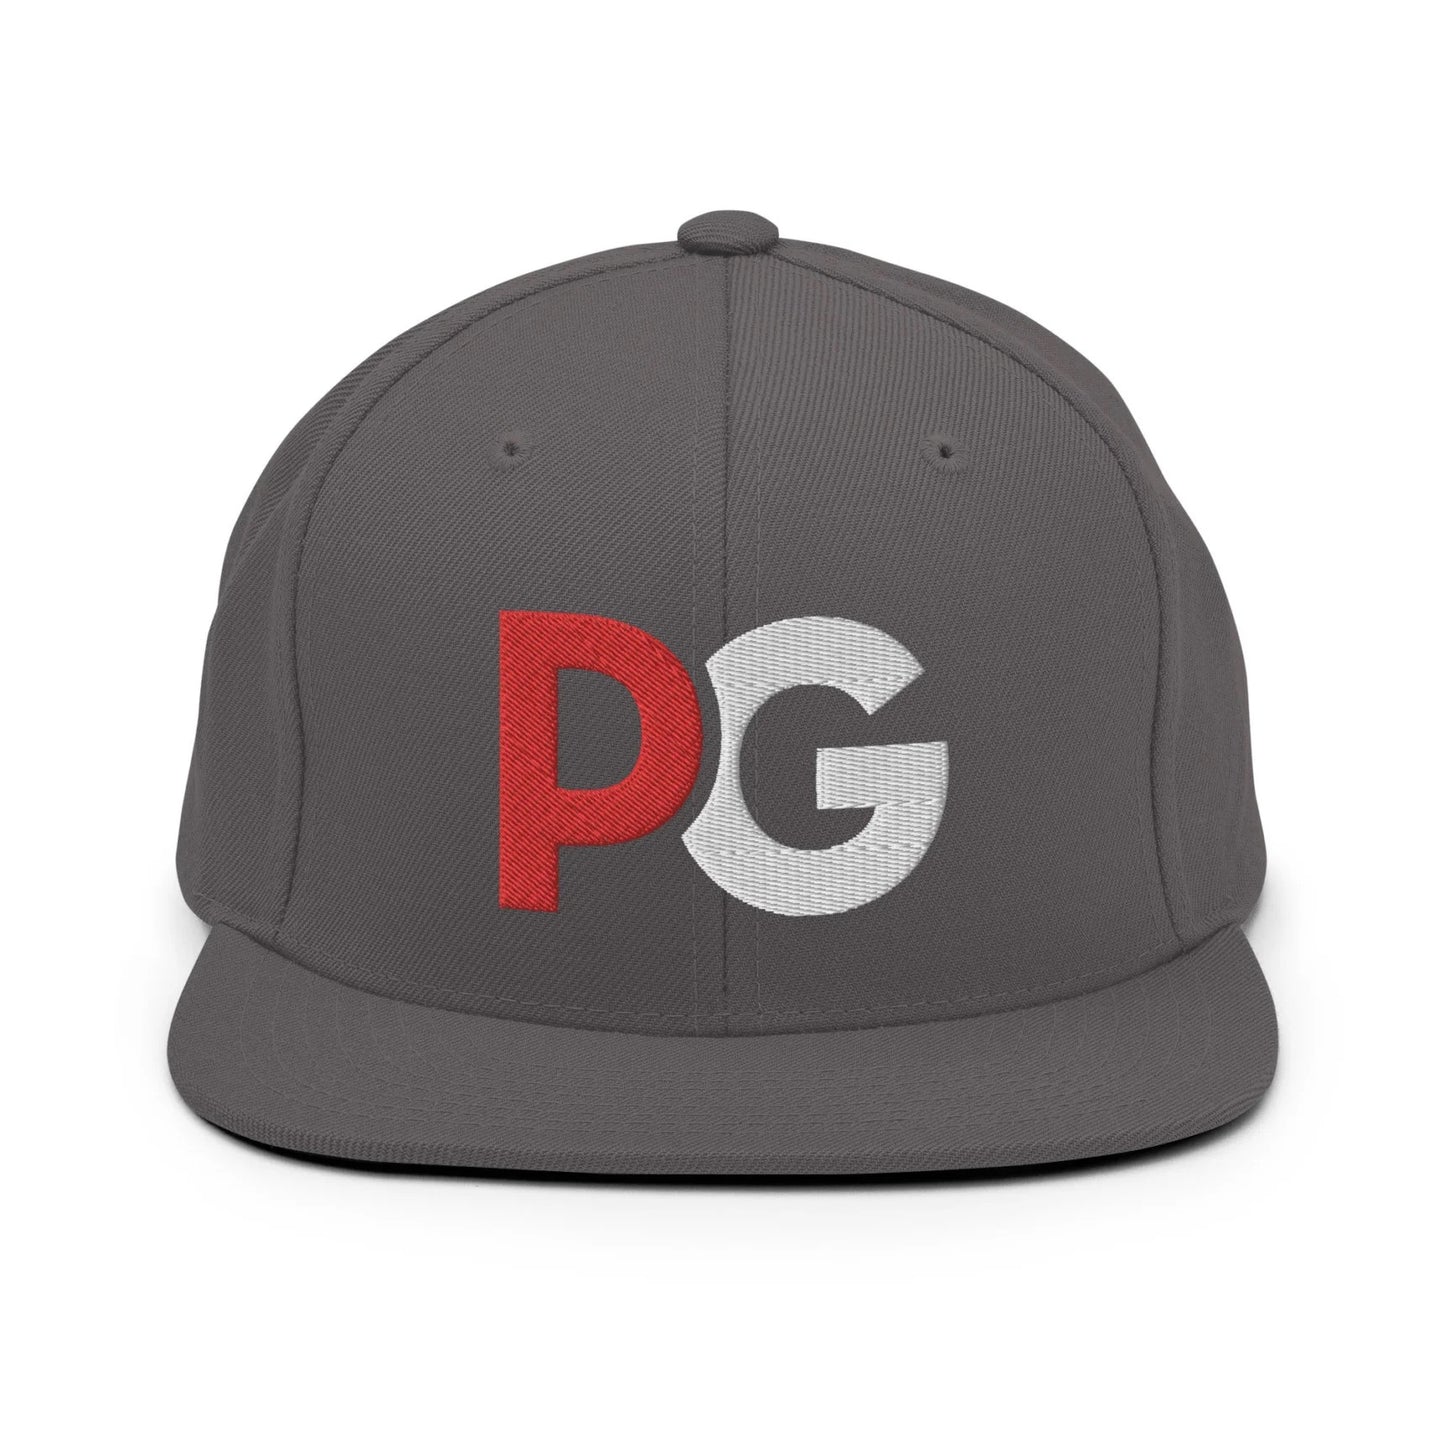 ProfesorGamingTV Snapback Hat by ShowZone in dark grey